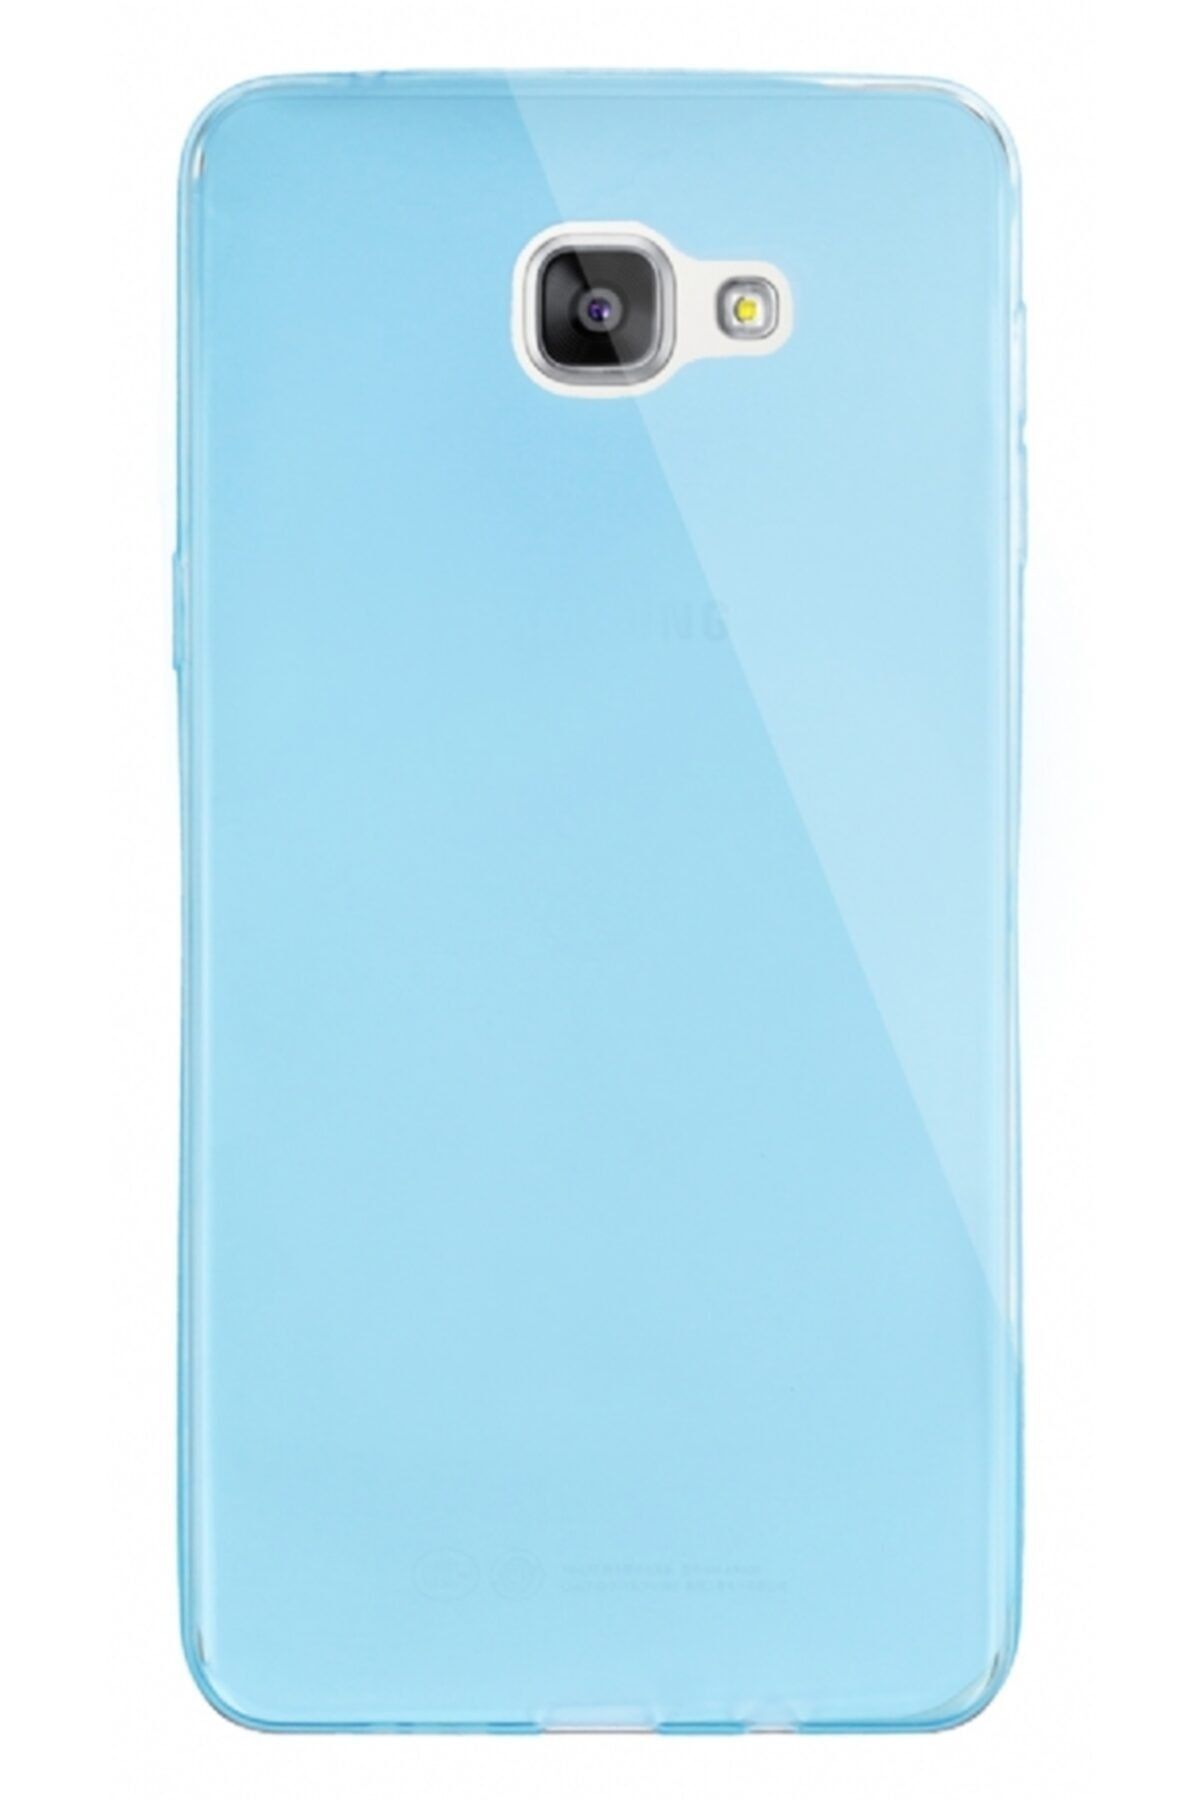 Dafoni Aircraft Samsung Galaxy A9 Ultra Ince Şeffaf Mavi Silikon Kılıf